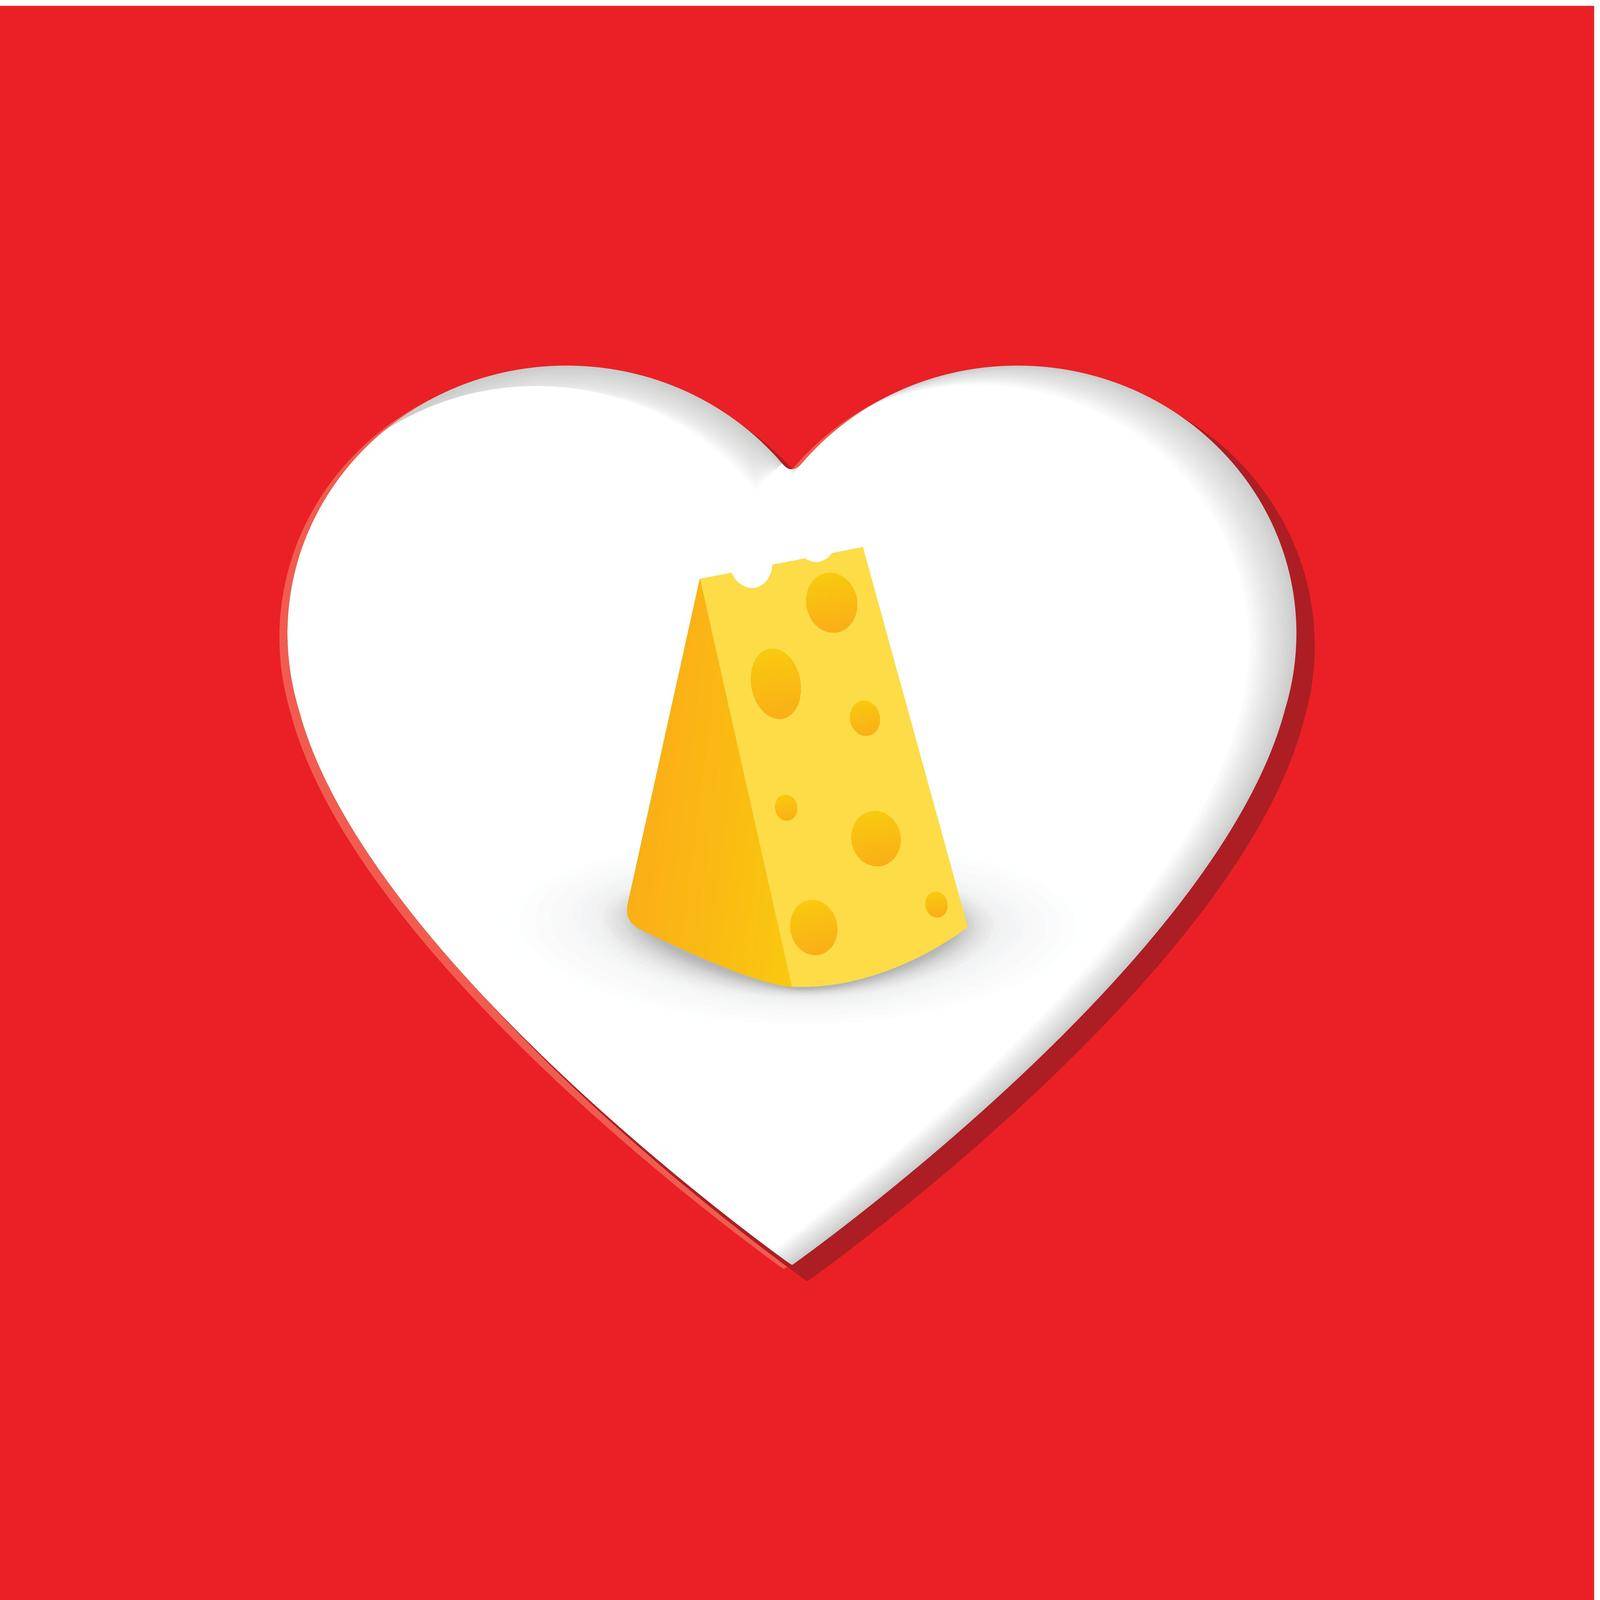 Cheese in shape of heart by macroarting